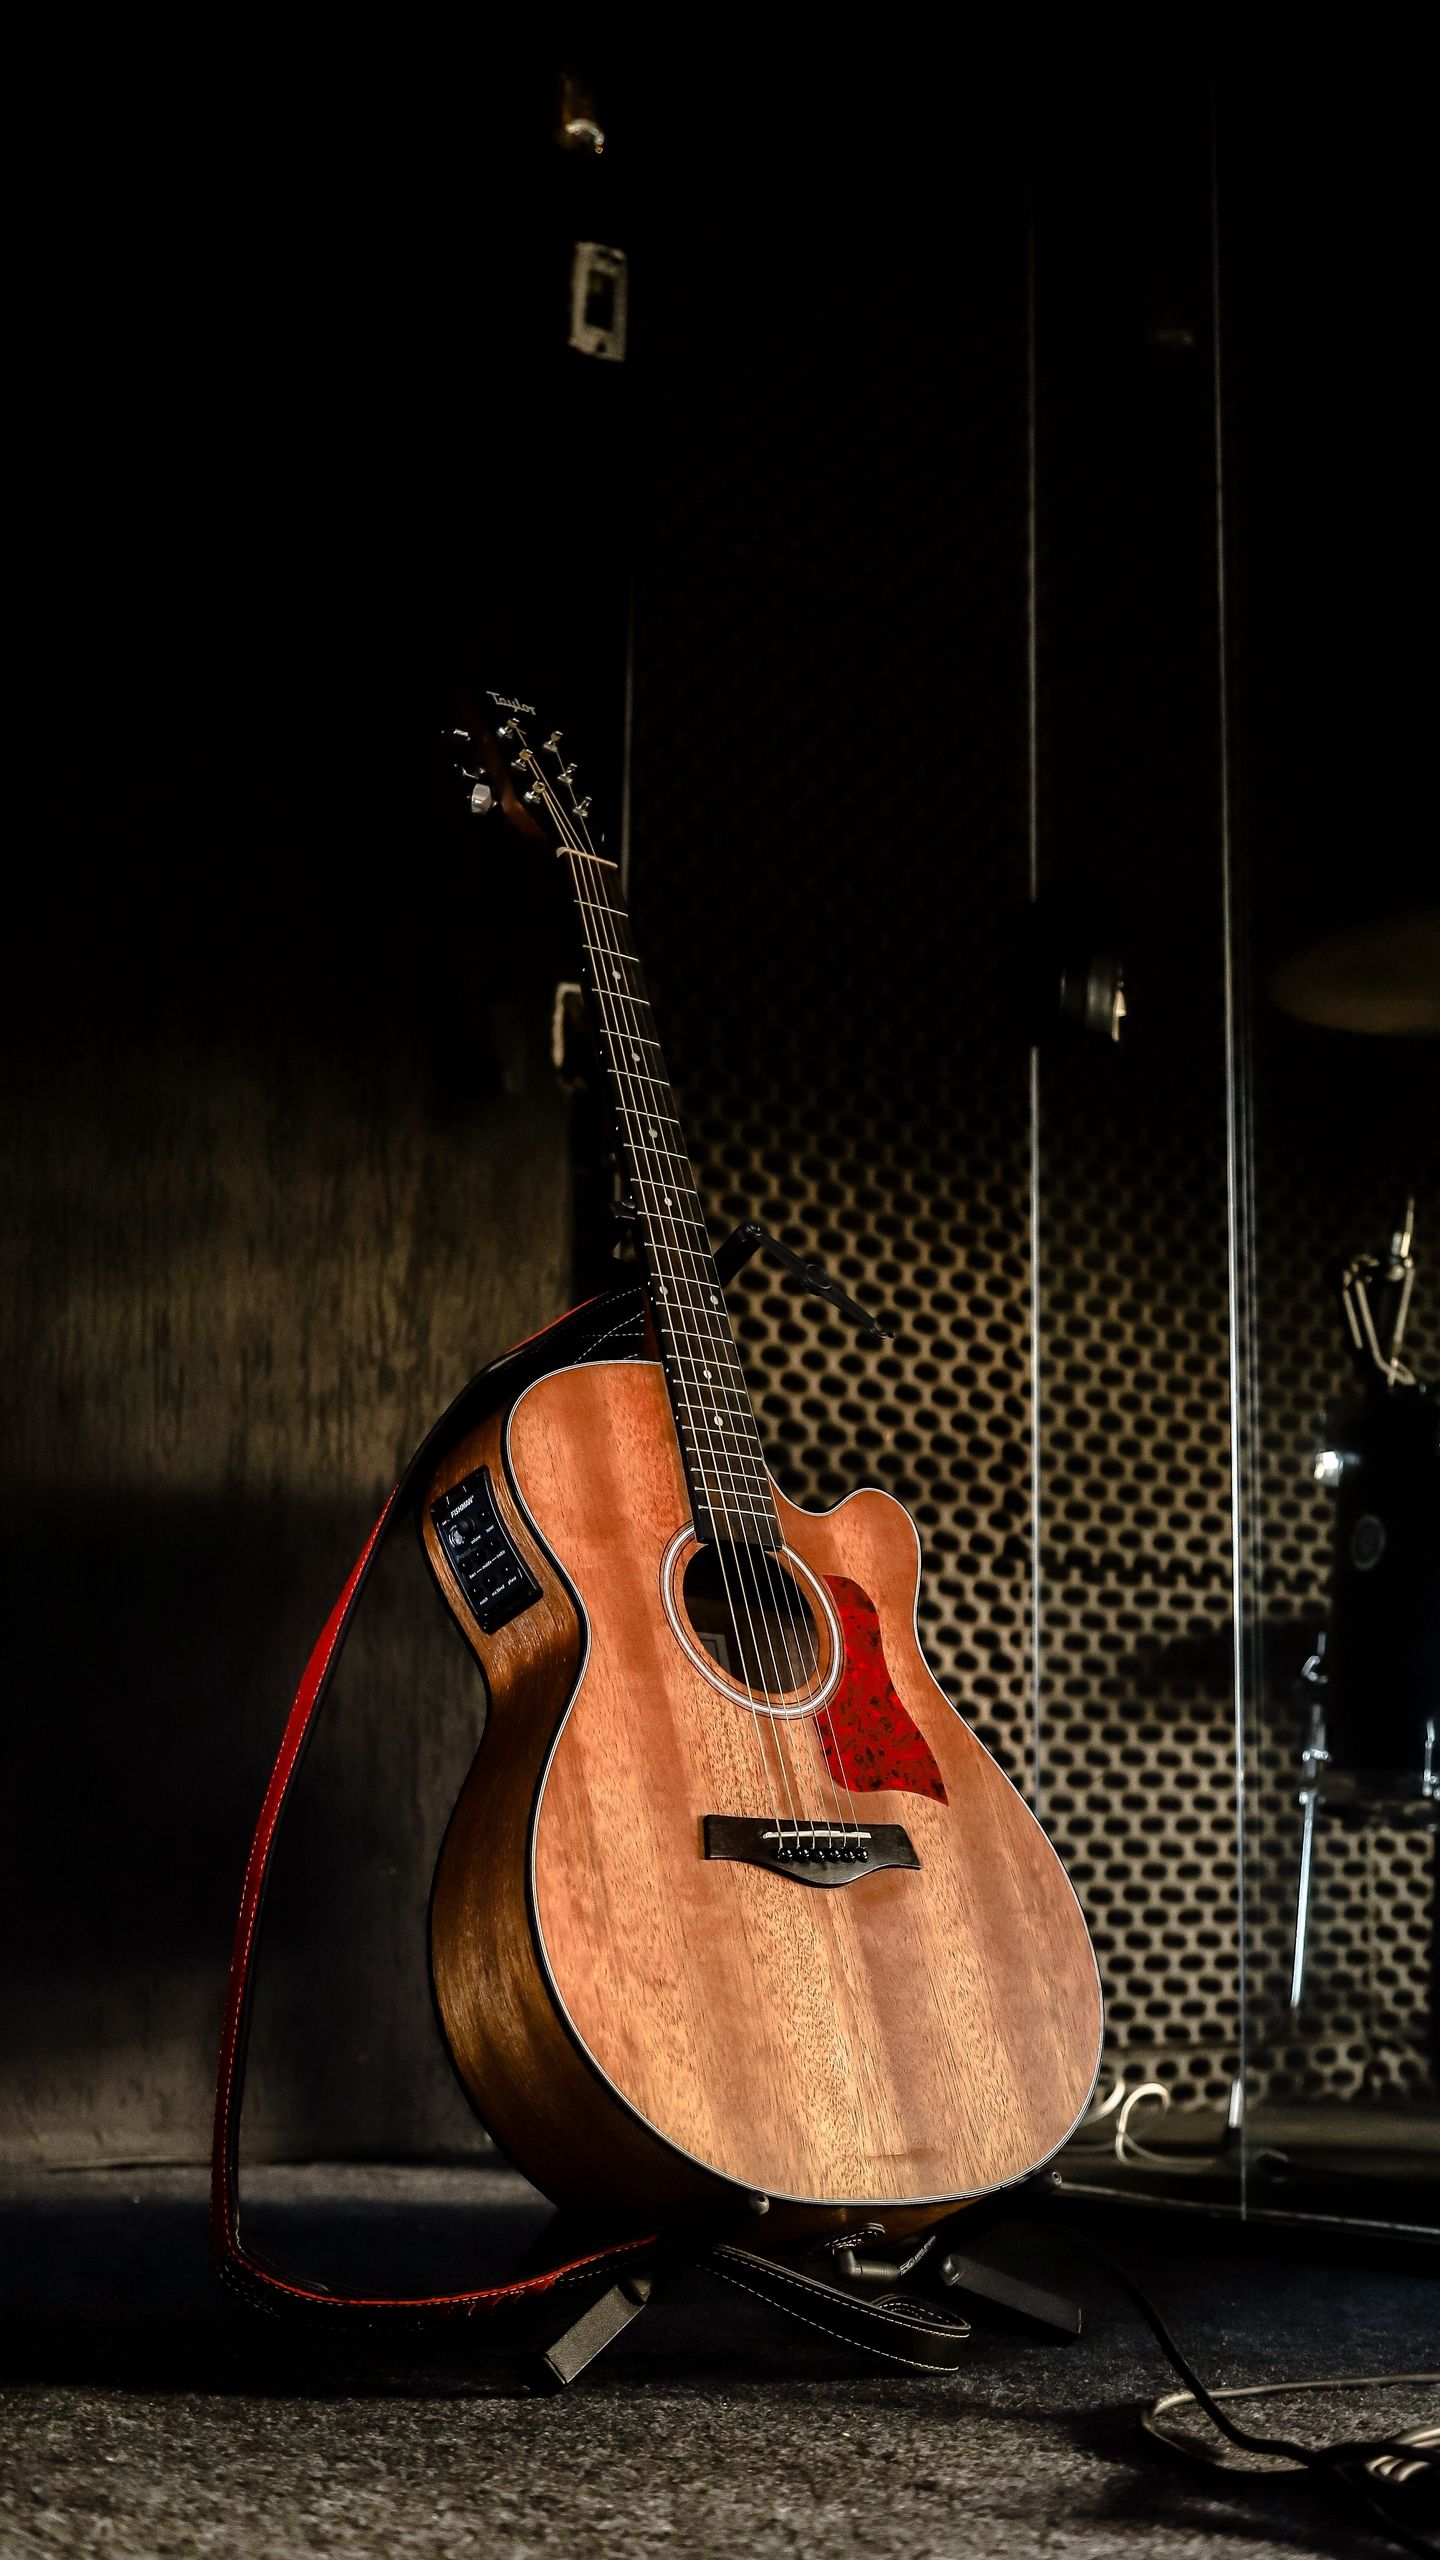 A Taylor acoustic guitar in a dark room. - Guitar